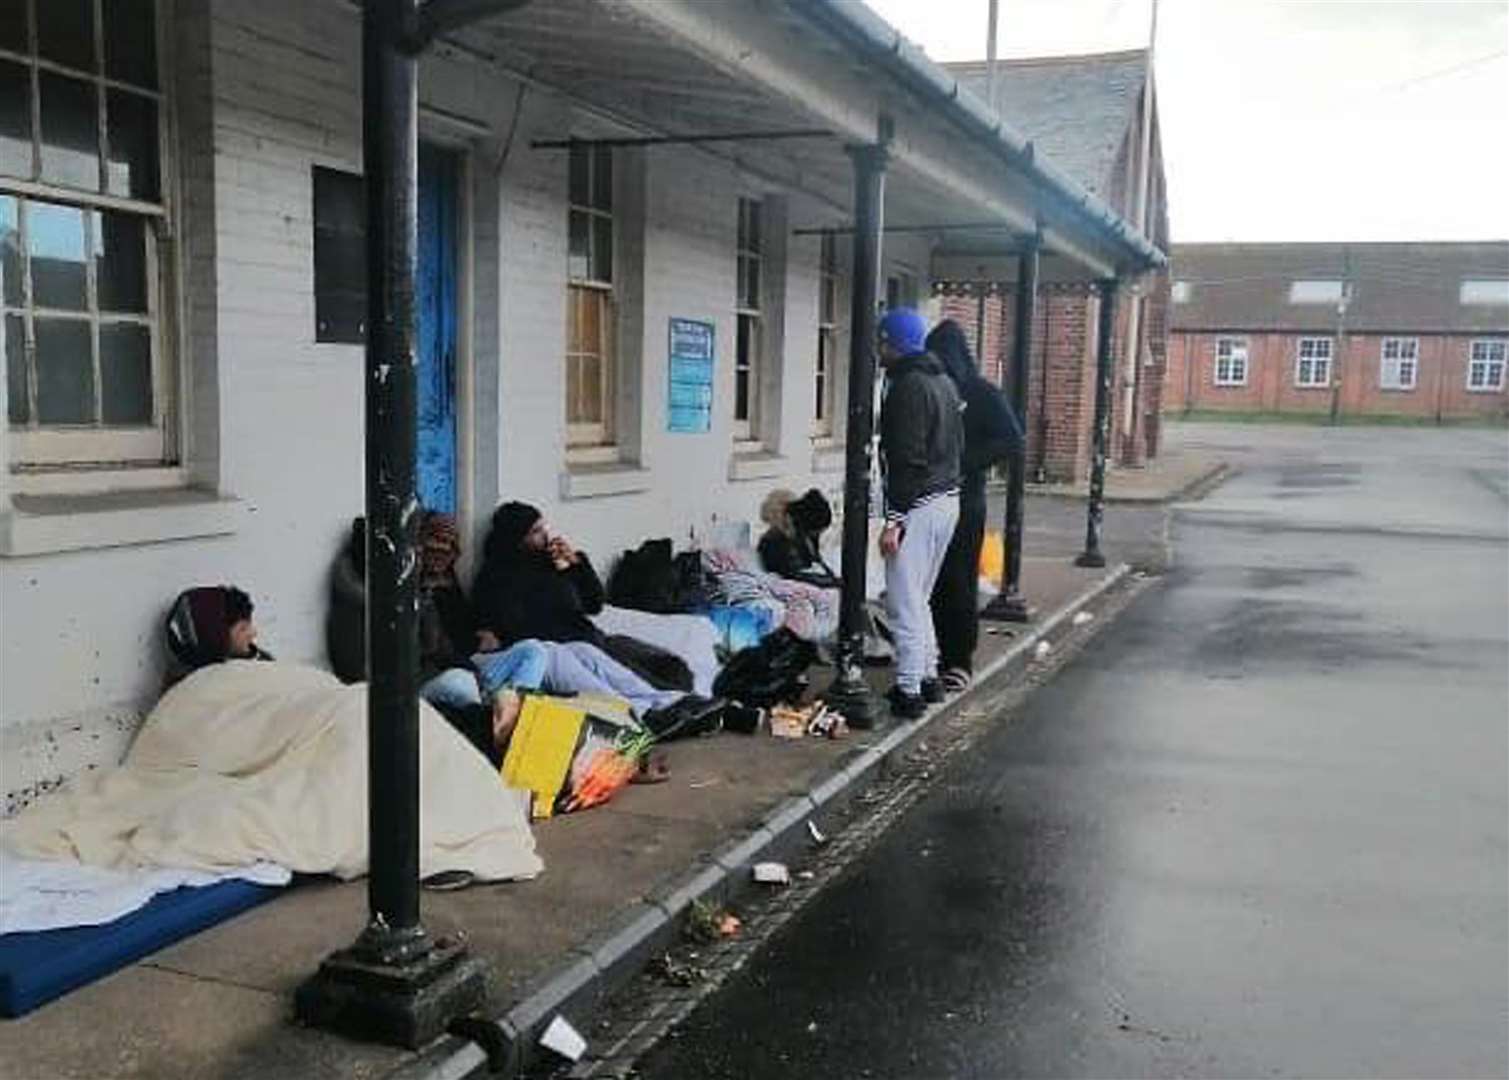 Asylum seekers on a sleep-out protest at Napier Barracks in Folkestone, Kent (Care4Calais/PA)